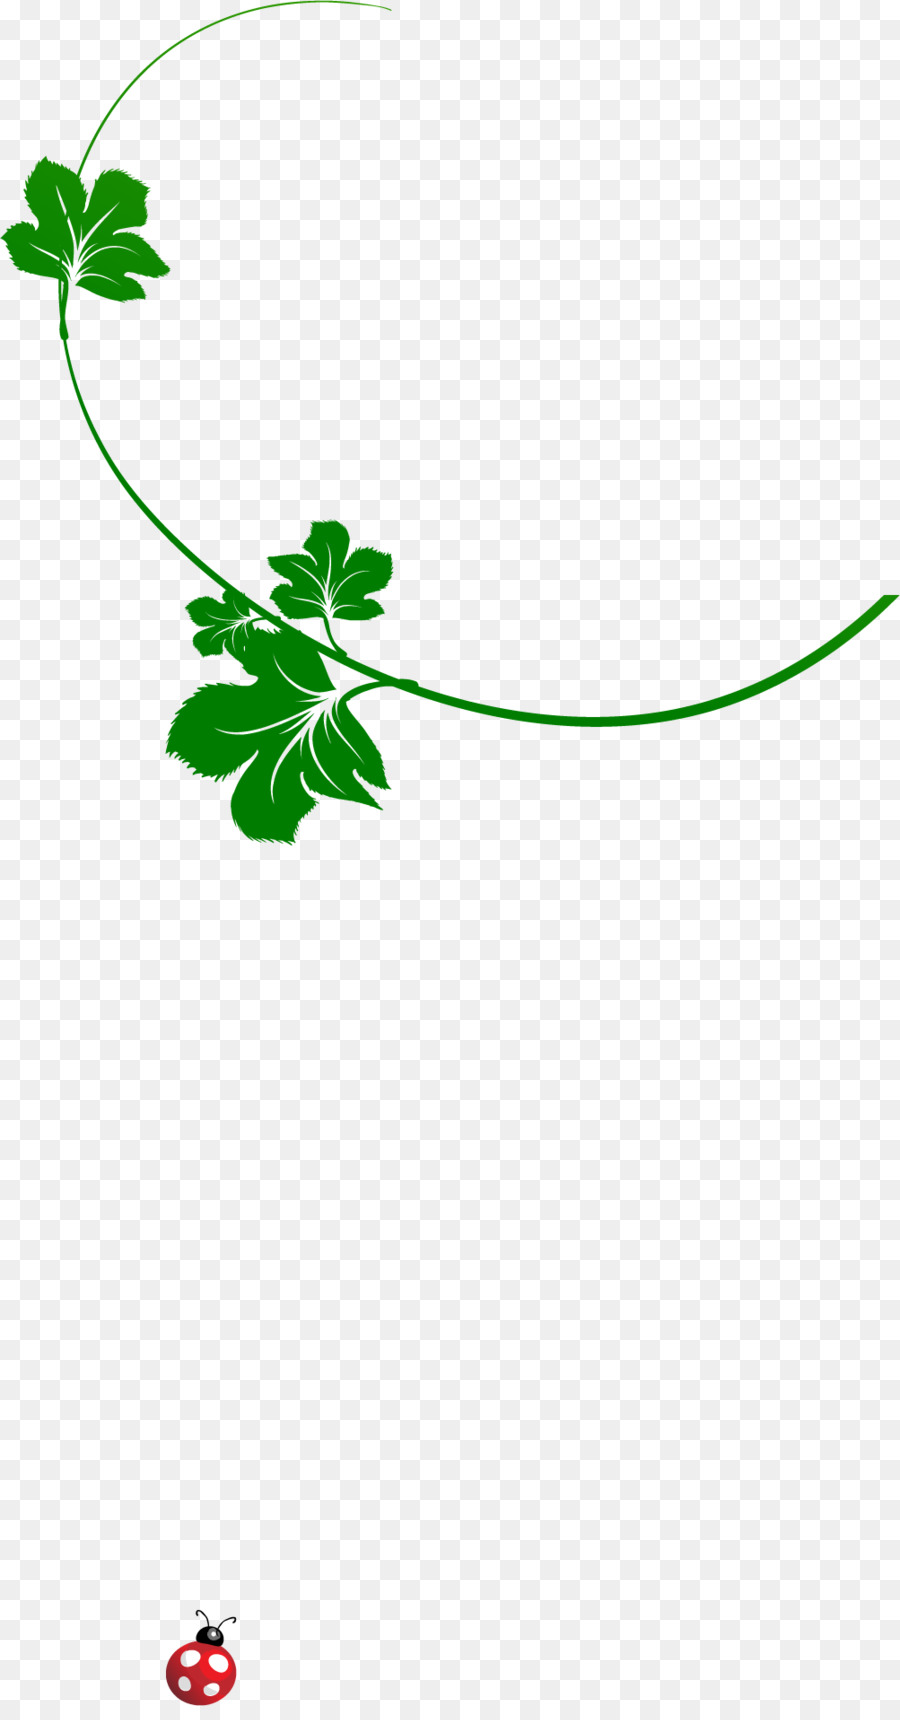 Leaf Green Download Clip art - Blatt